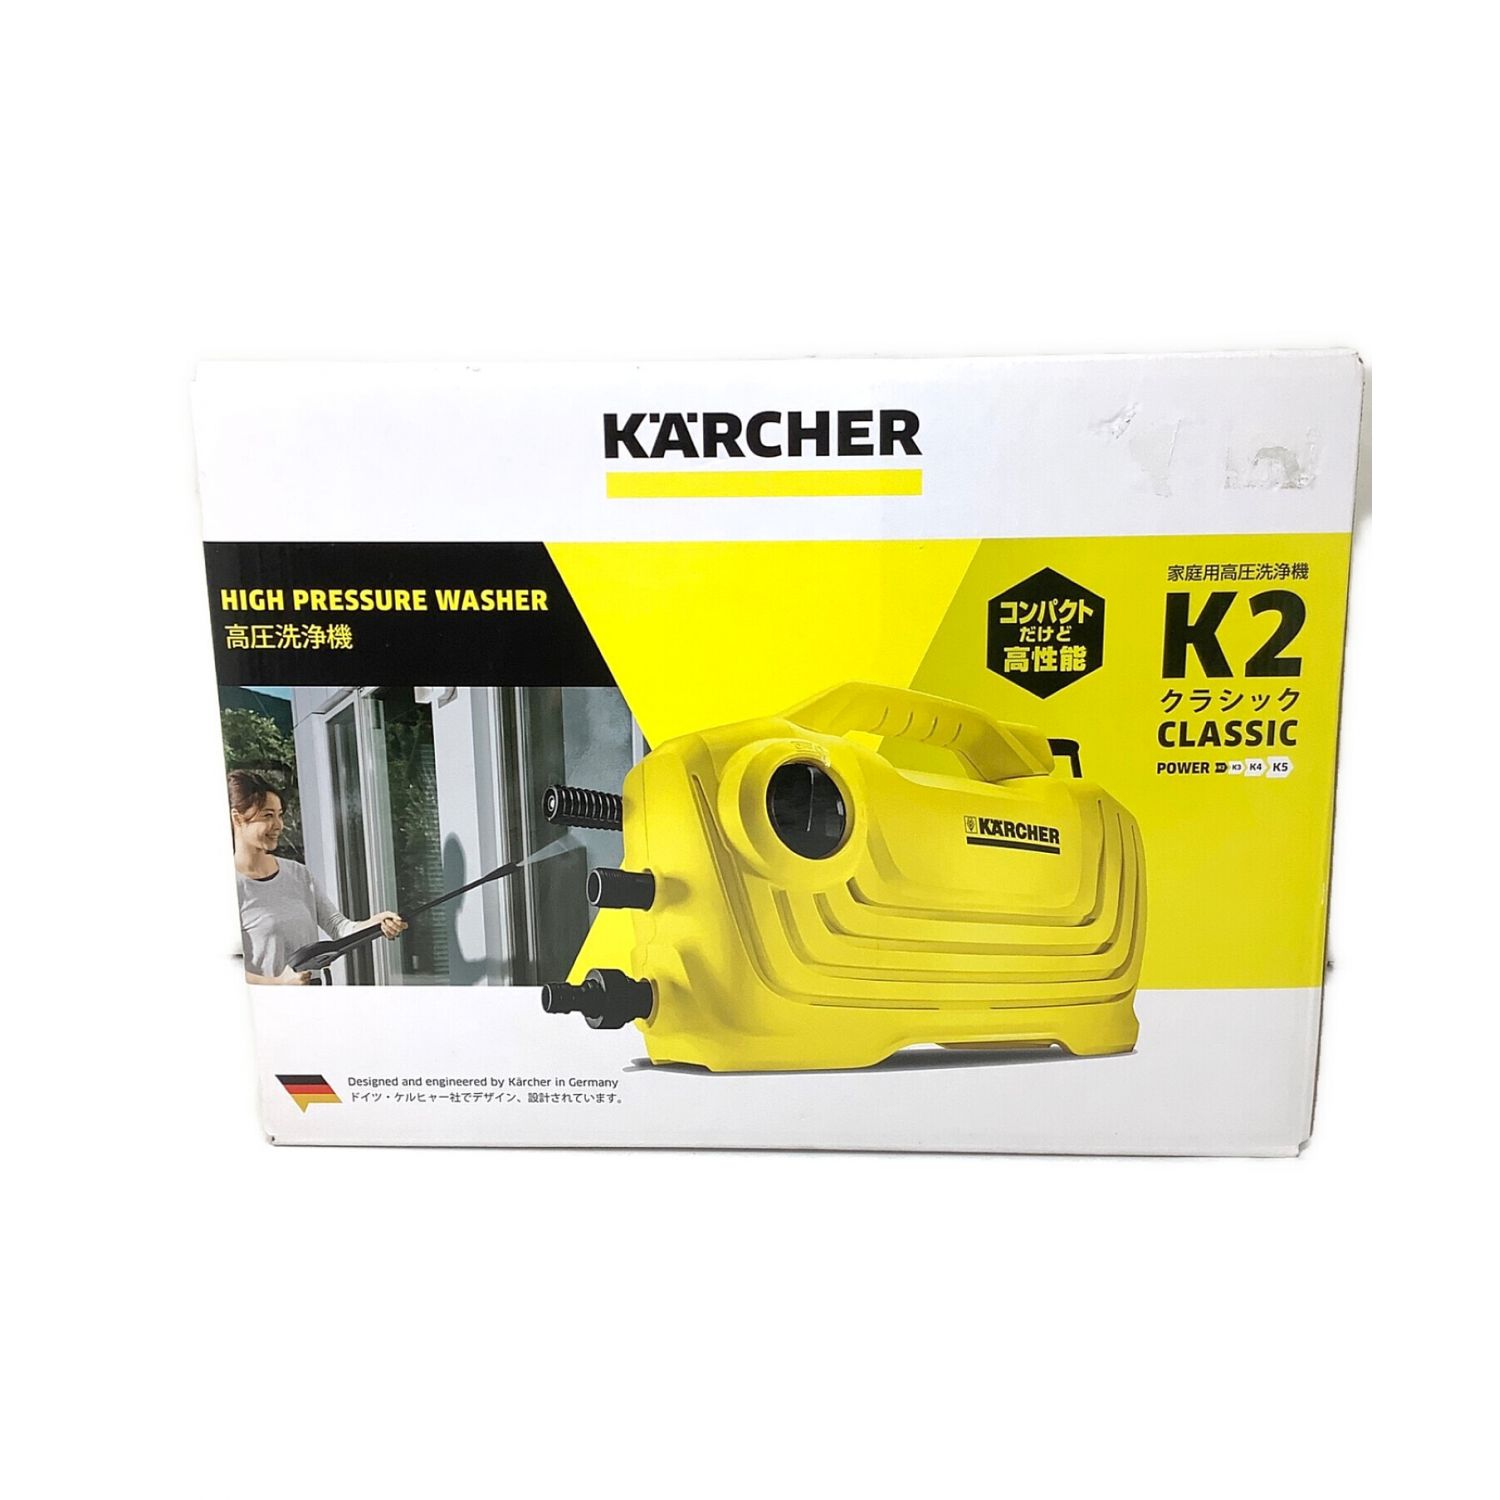 Karcher (ケルヒャー) 高圧洗浄クリーナー K2 クラシック 1600-970